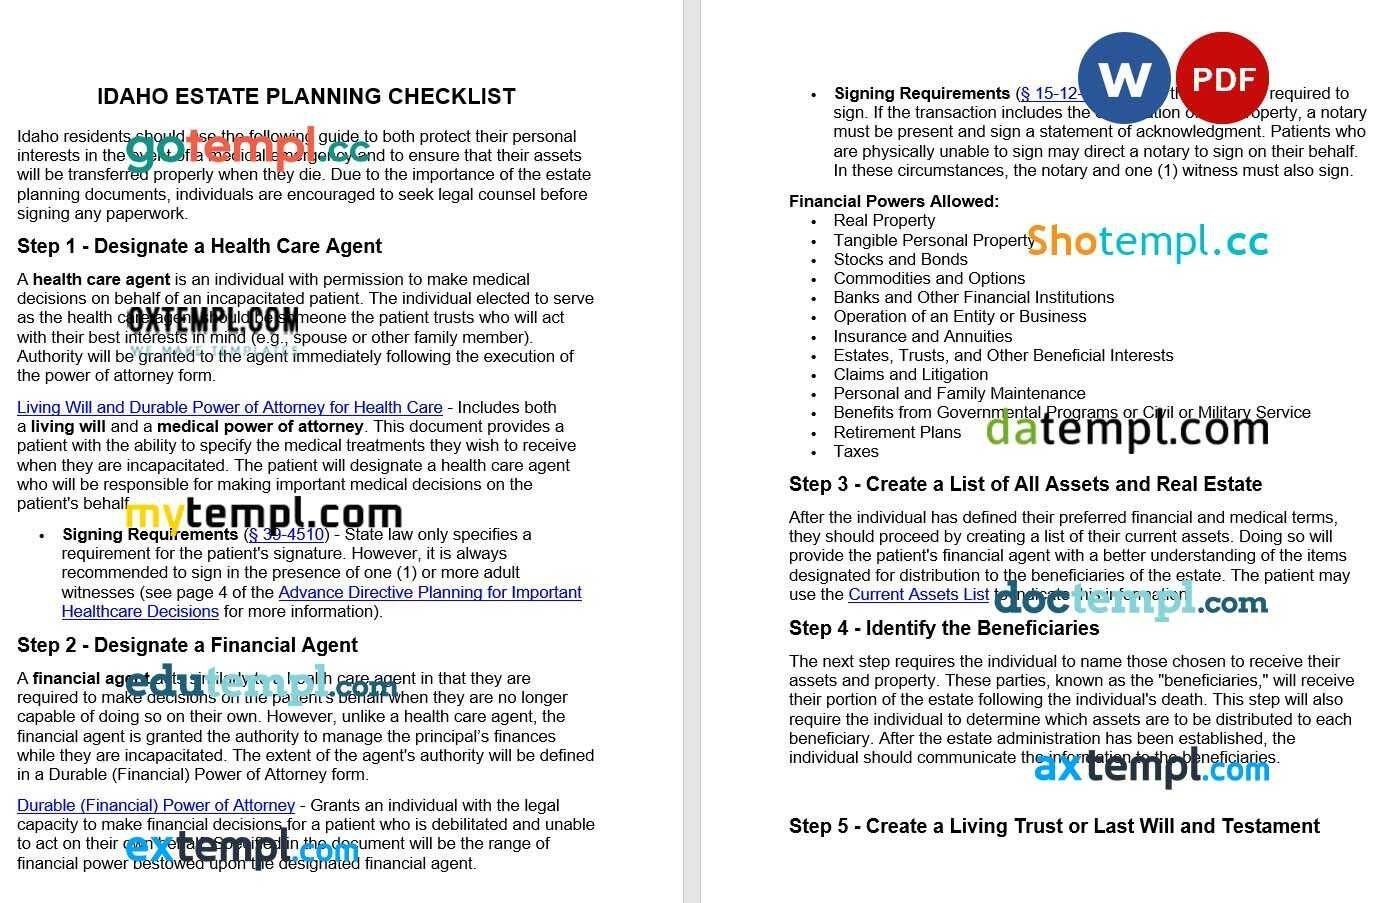 Idaho Estate Planning Checklist example, fully editable